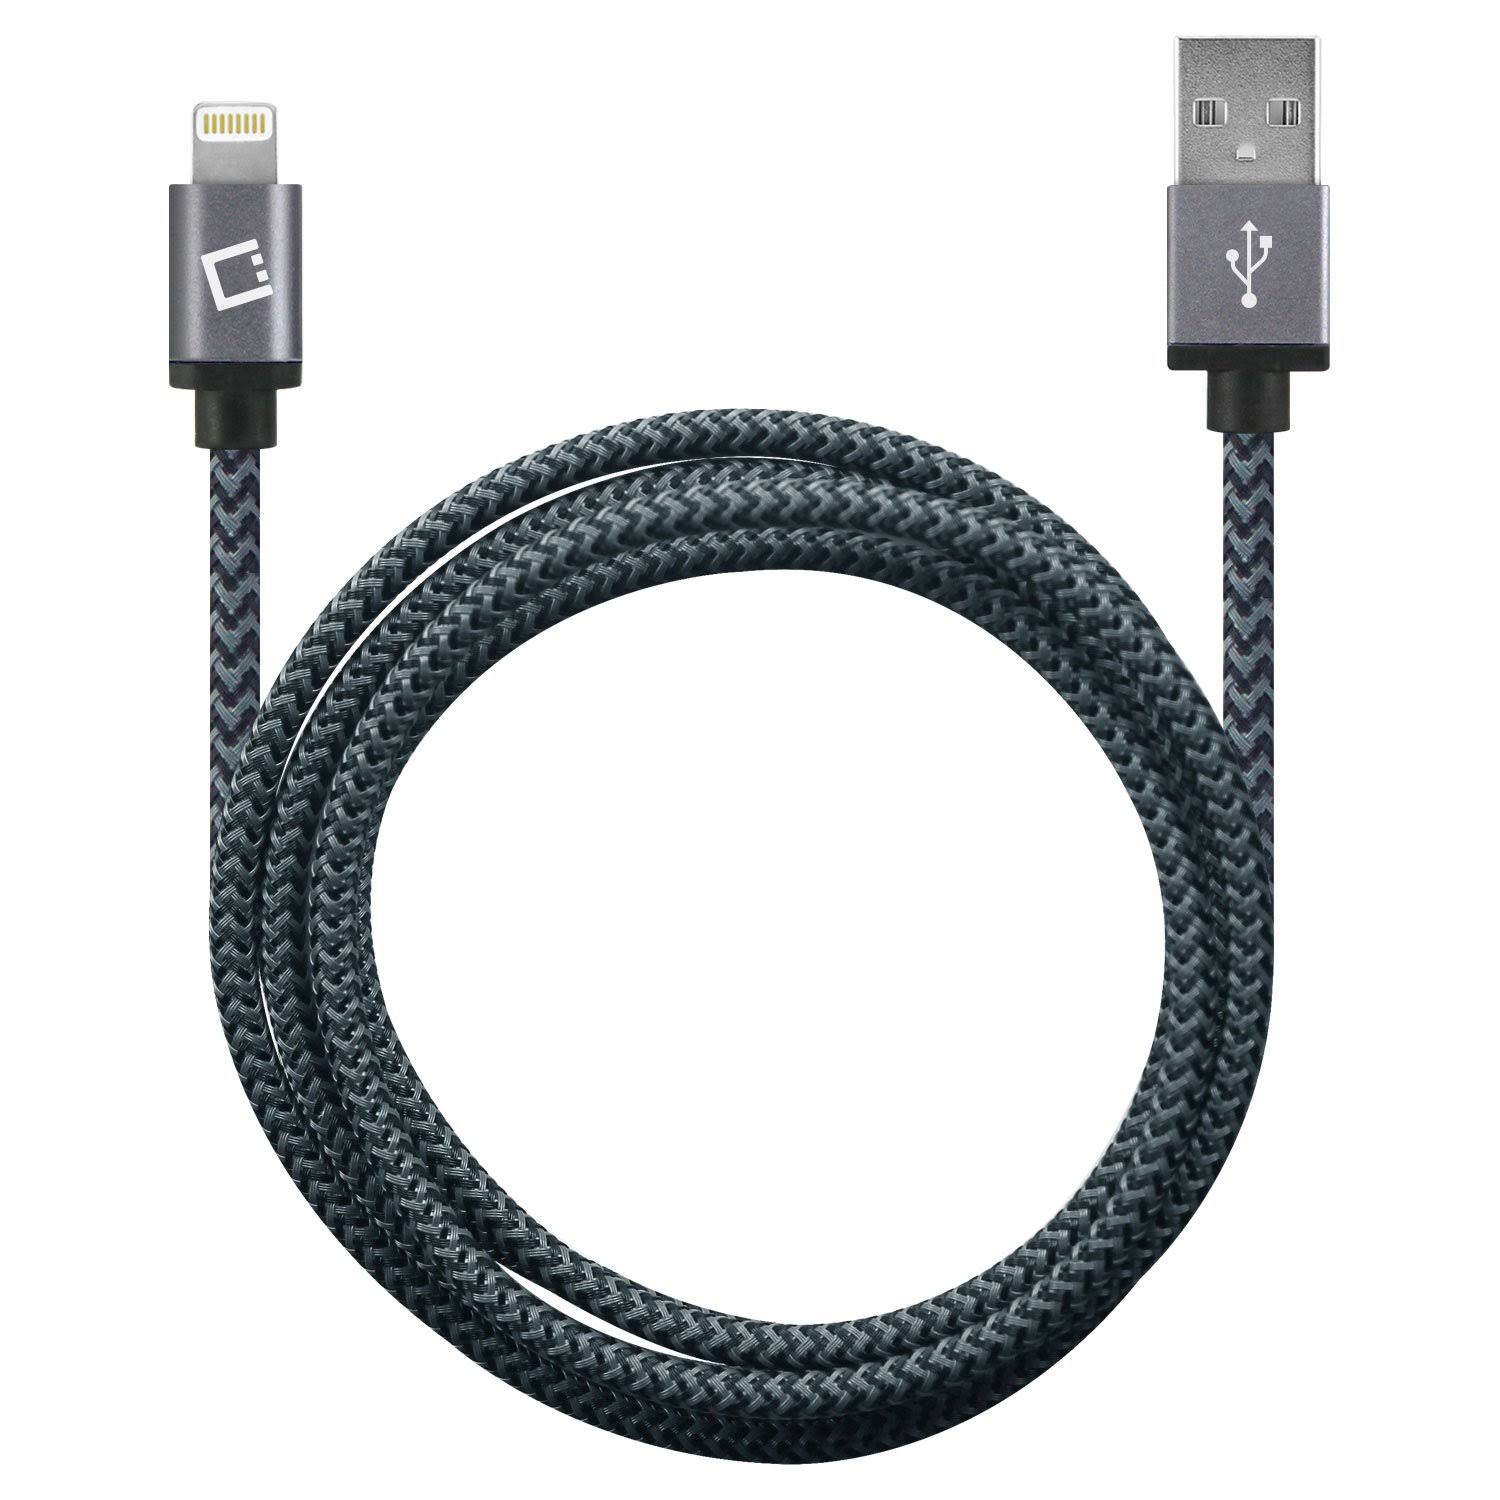 Cellet Lightning USB Charging Plus Data Cable - Black, 4'